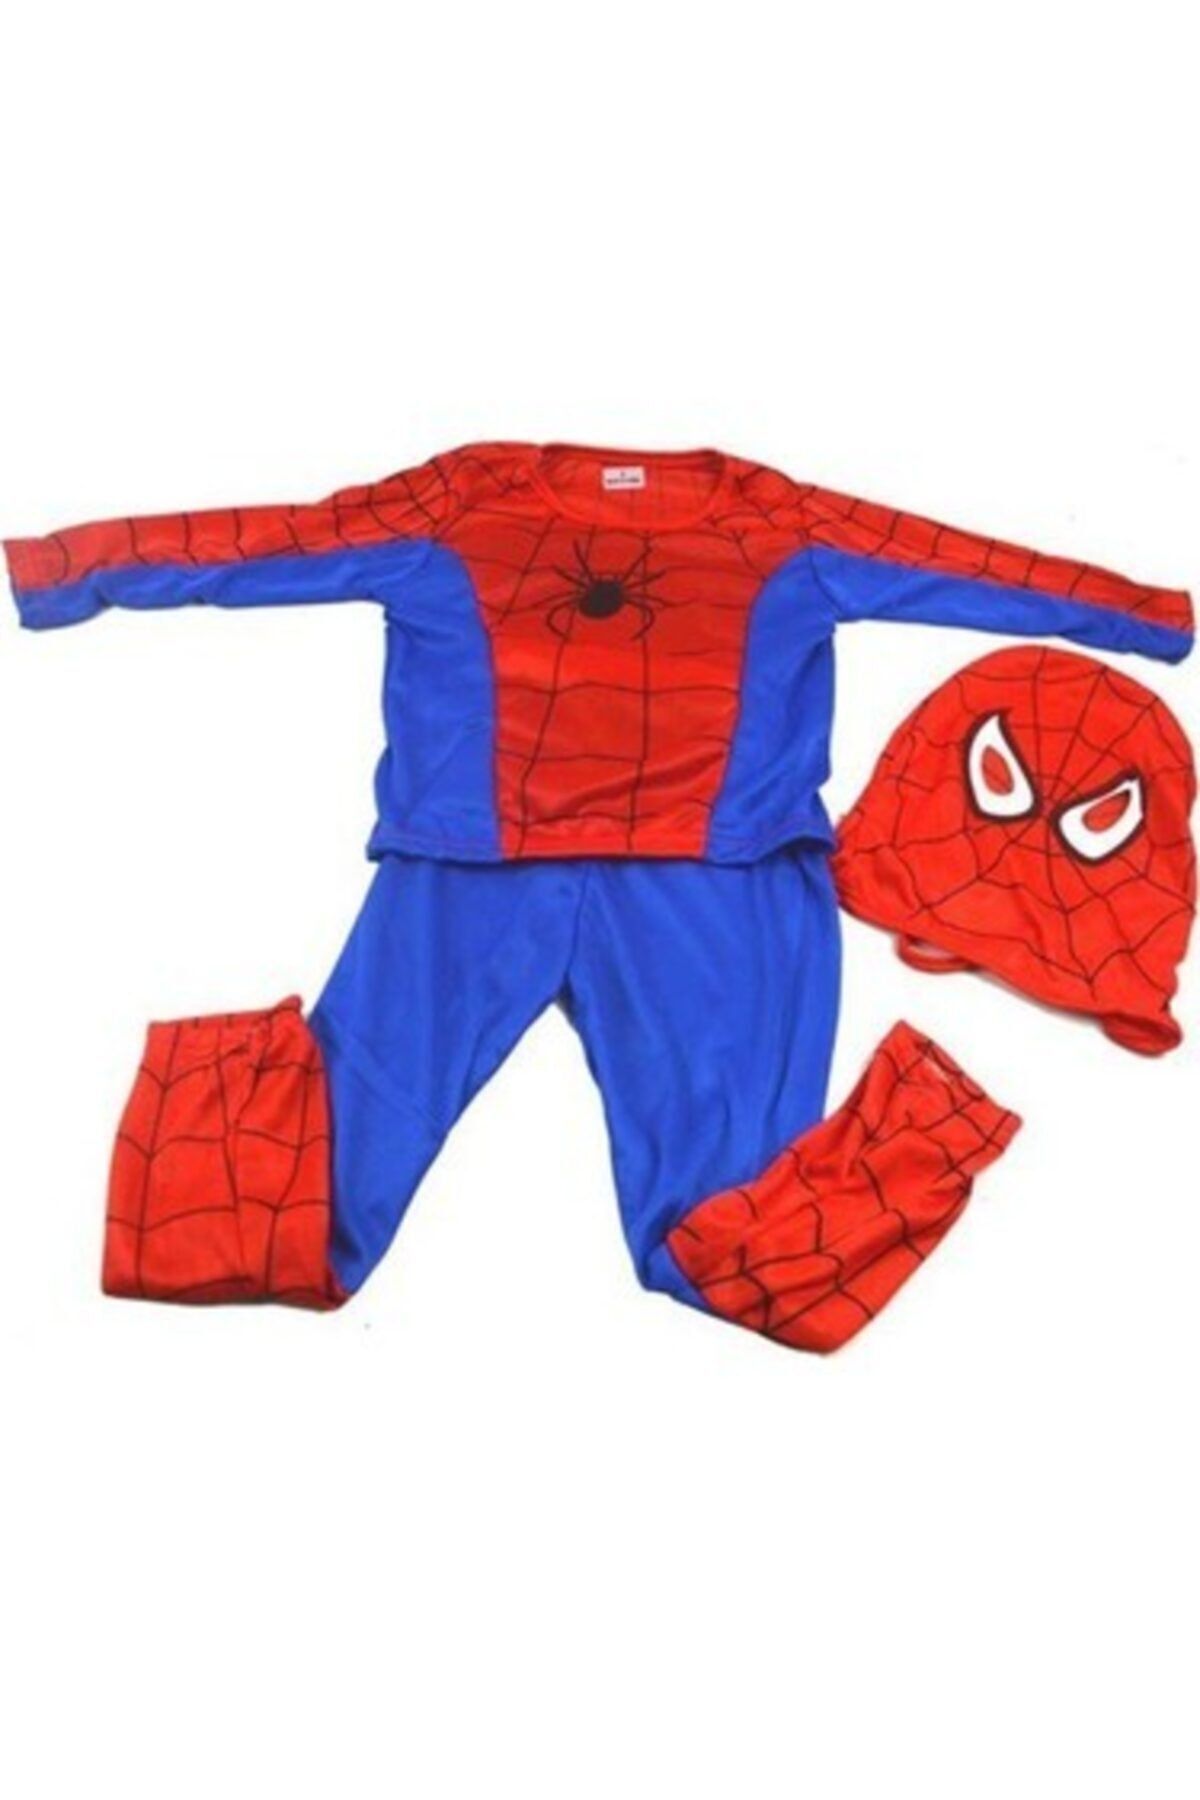 DİSNEY Spıderman Kostüm 3 - 4 Yaş Spiderman Kostümü - Örümcek Adam Spider Man Parti Kostüm